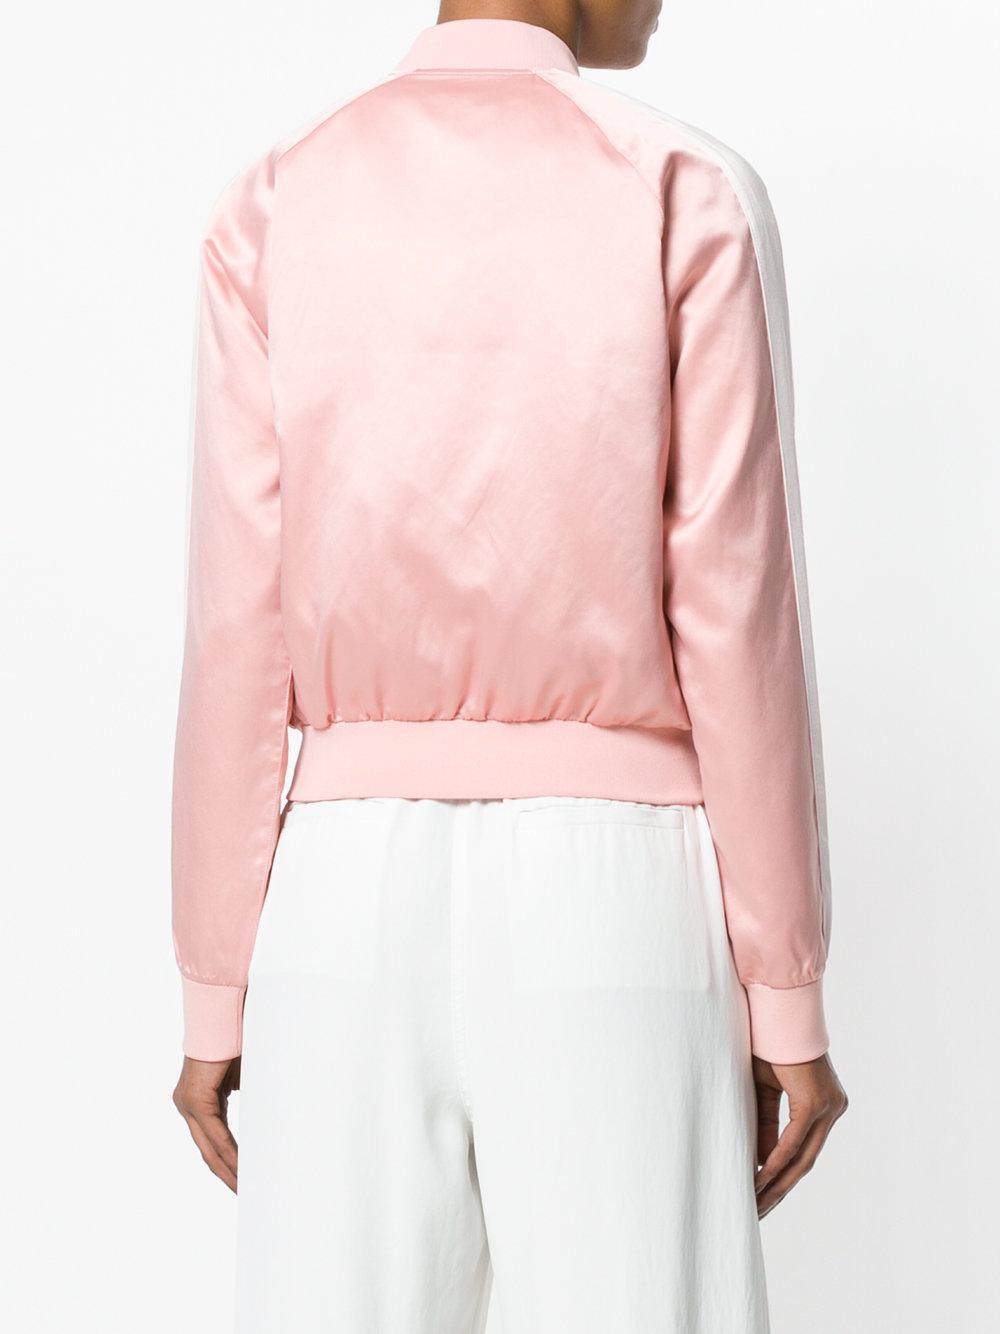 نداء لتكون جذابة انضباط شبه جزيرة puma pink bomber jacket -  mindfulandessential.com